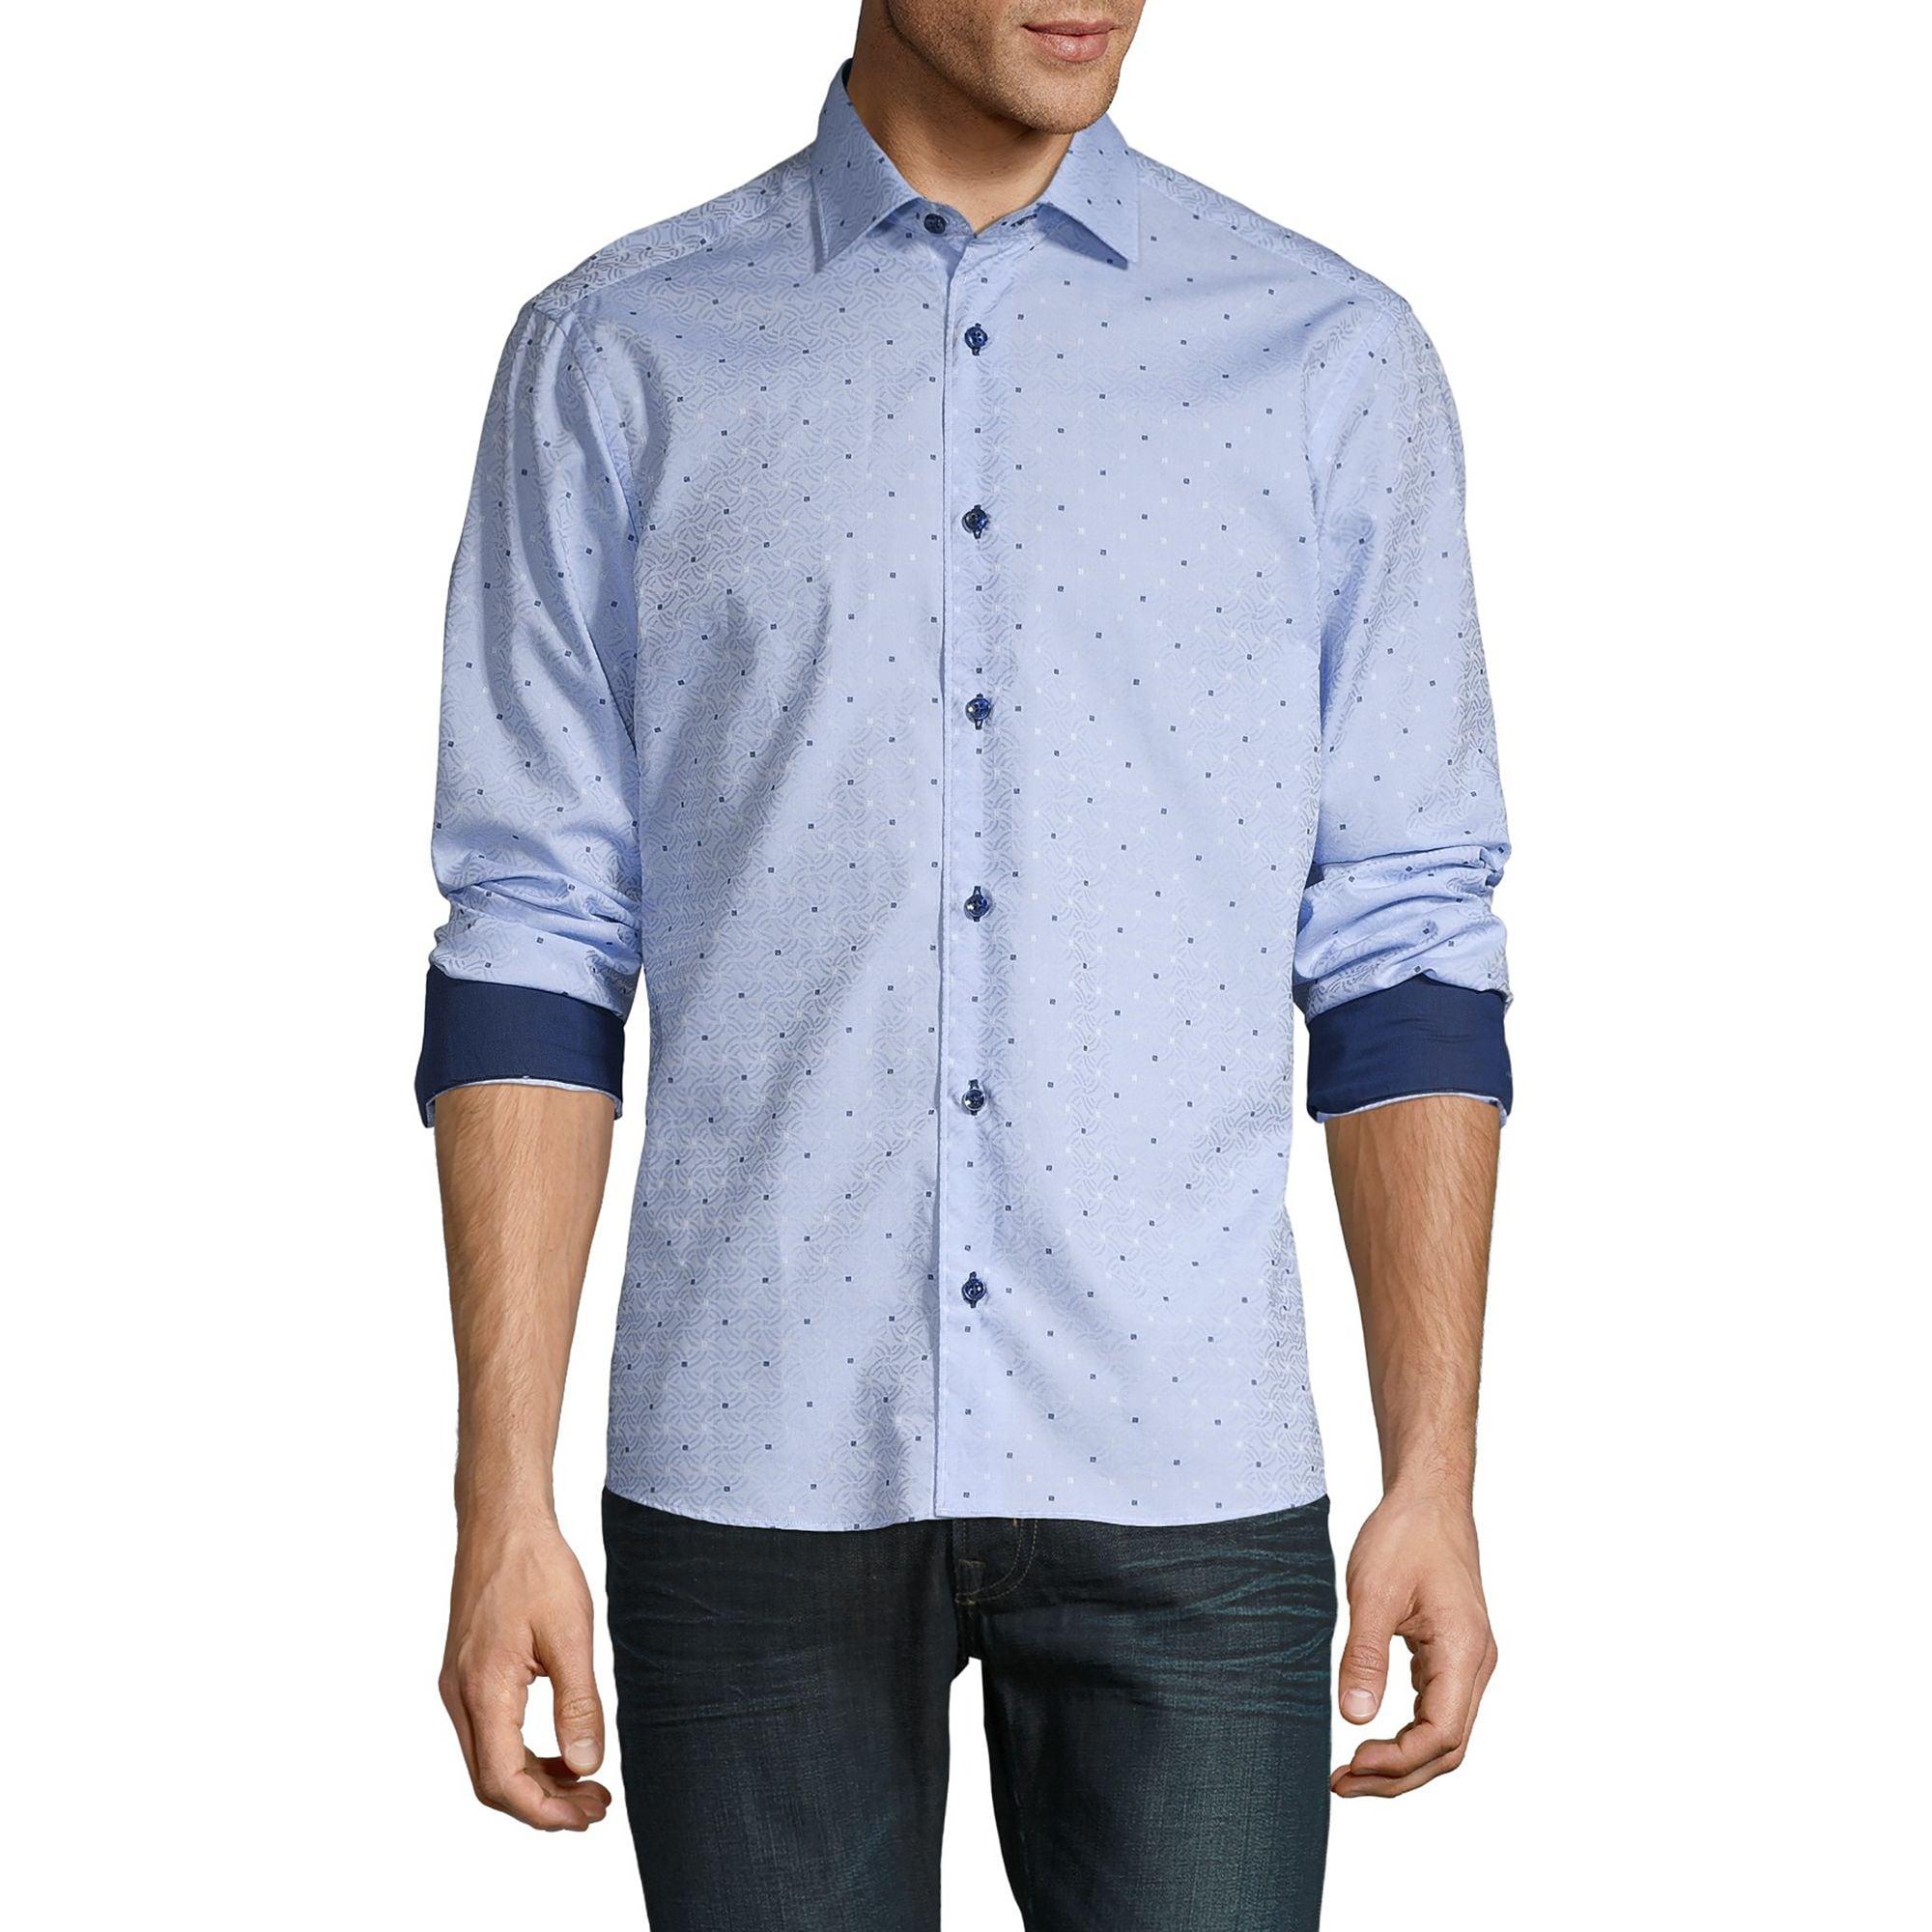 Bertigo Cotton Printed High-low Shirt in Blue for Men - Lyst